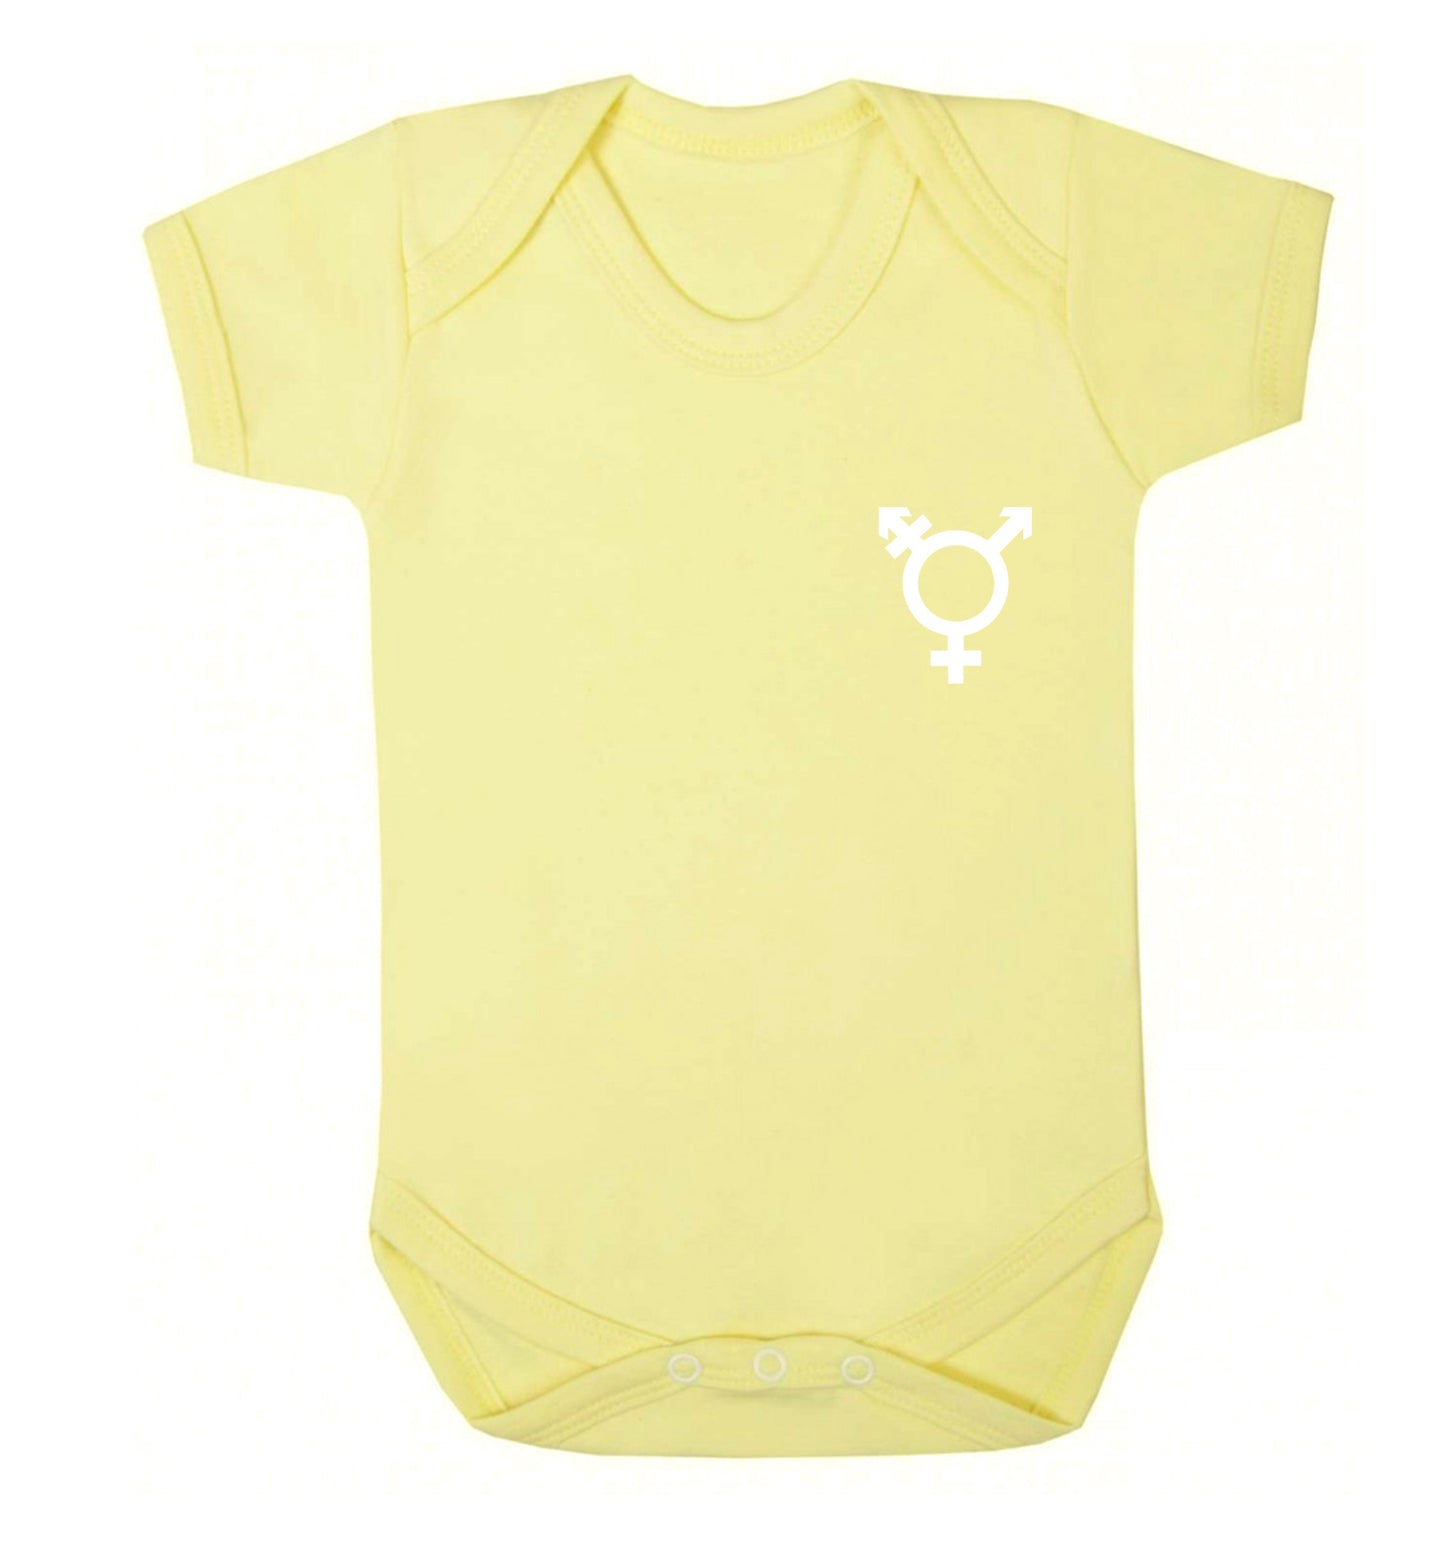 Trans gender symbol pocket Baby Vest pale yellow 18-24 months